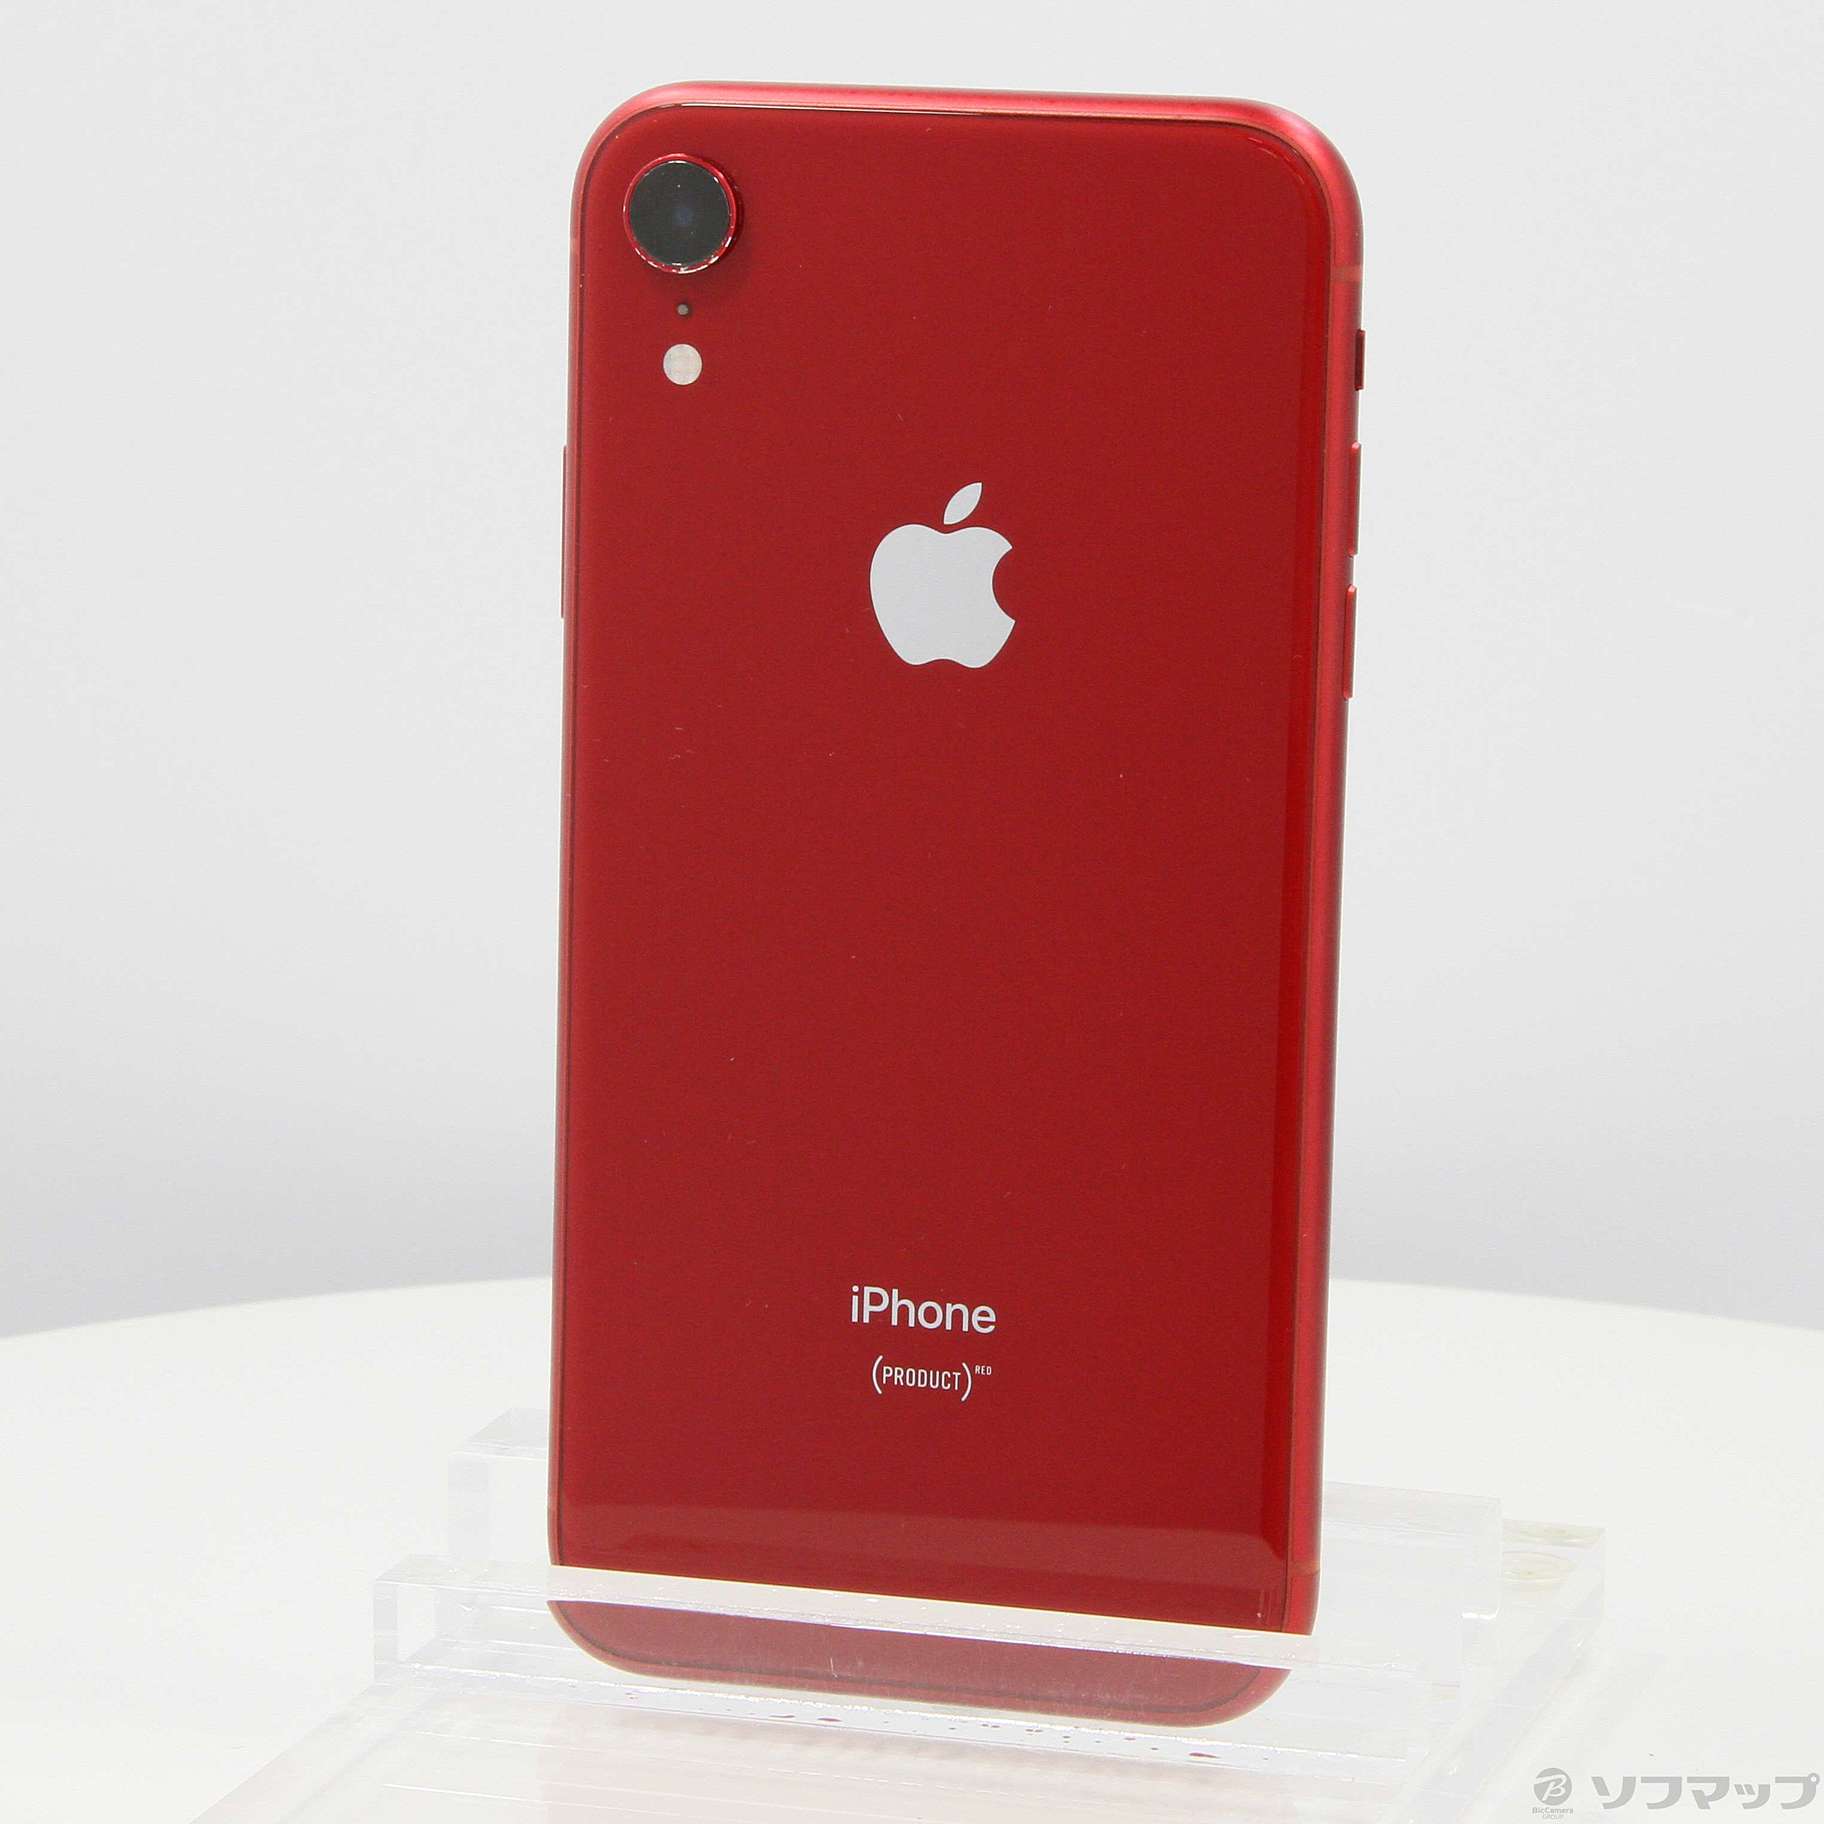 iPhoneXR 256GB SIMフリー レッド institutoloscher.net